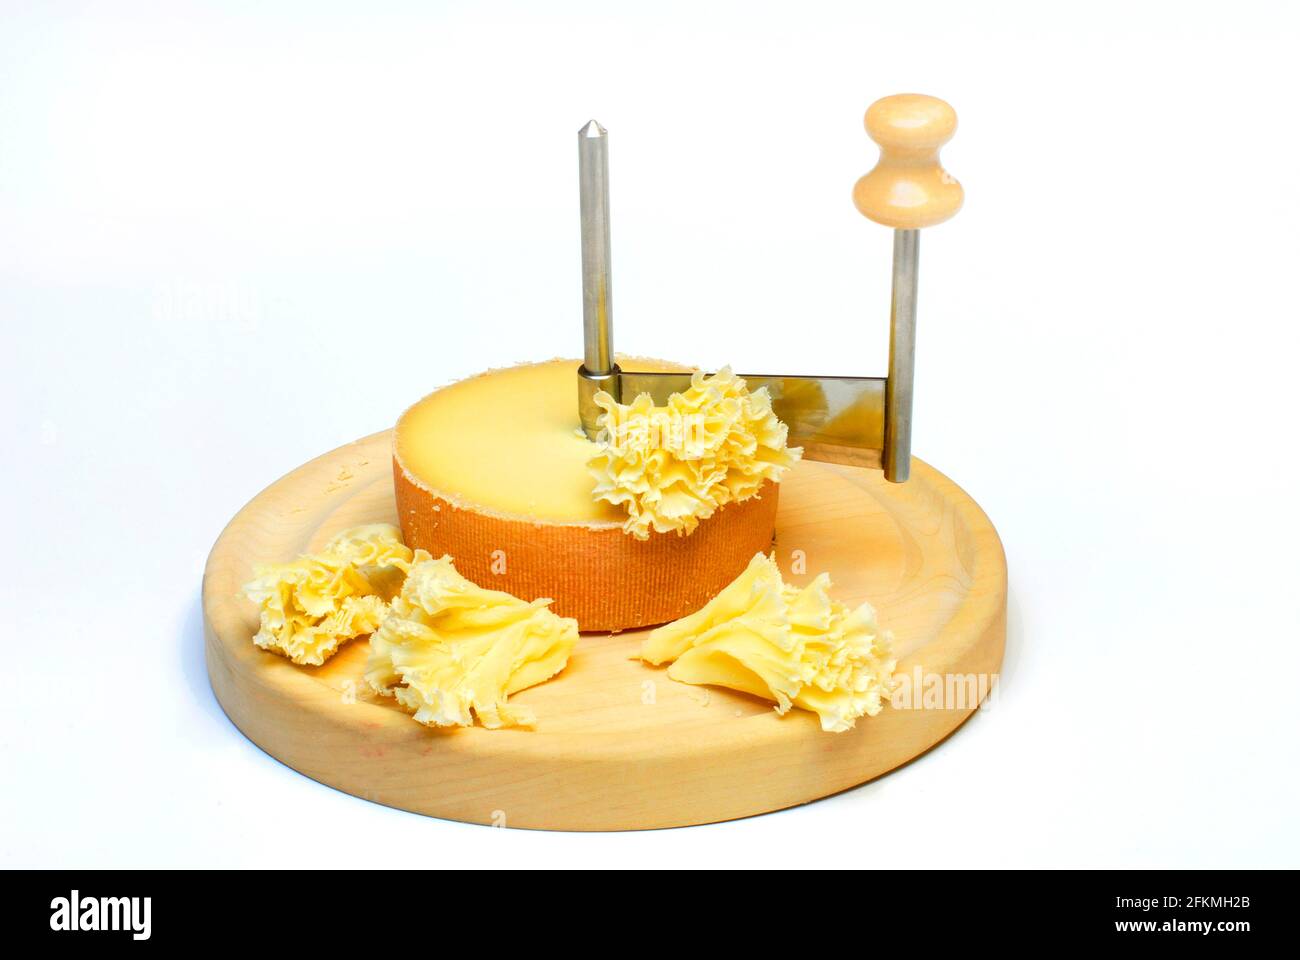 https://c8.alamy.com/comp/2FKMH2B/cheese-tete-de-moine-with-rotating-knife-girolle-cheese-rosettes-monks-head-2FKMH2B.jpg